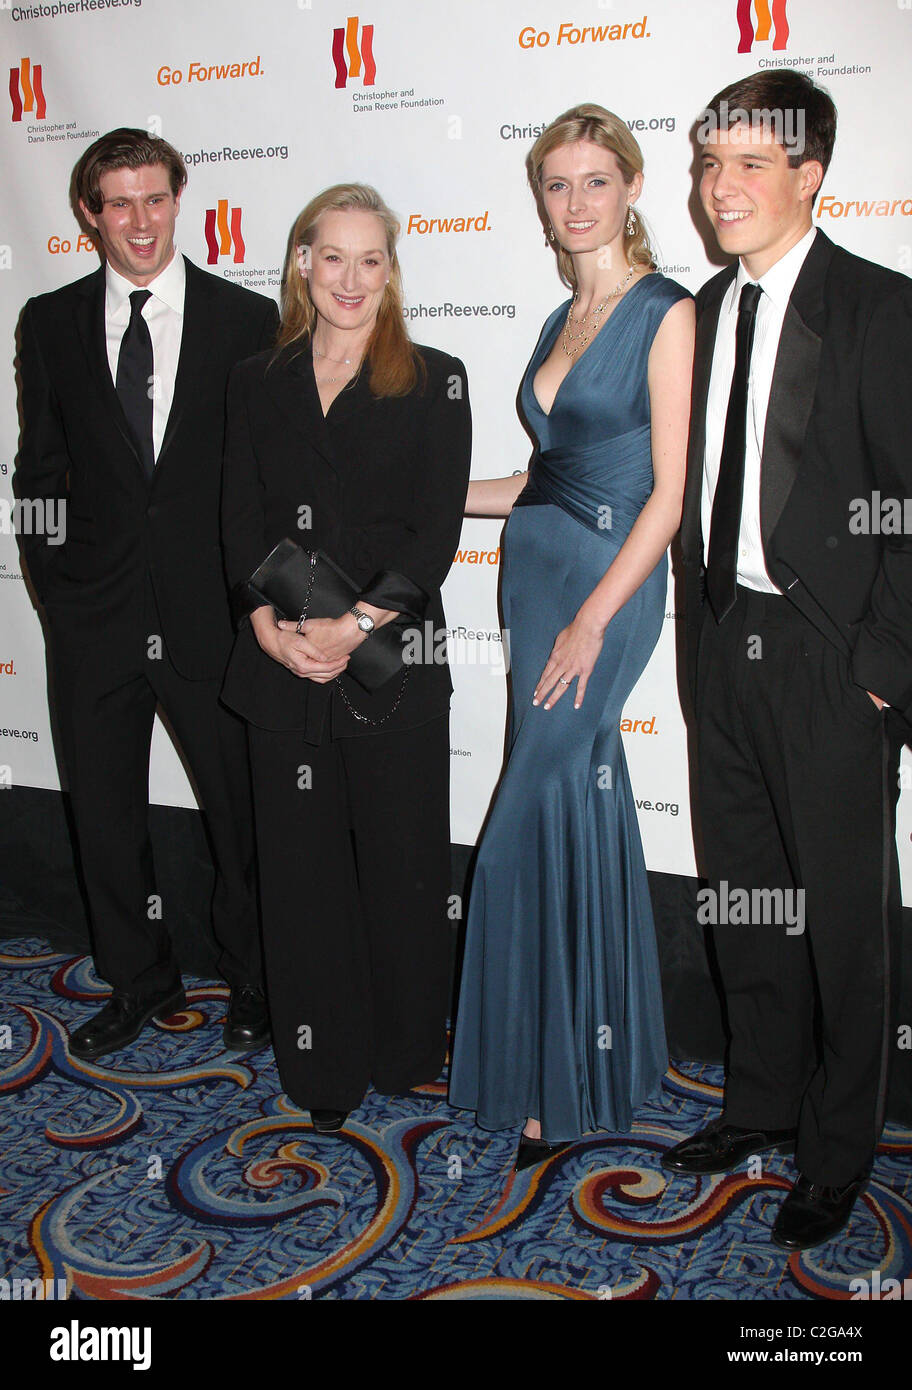 Matthew Reeve, Meryl Streep, Alexandra Reeve, wird der Christopher & Dana  Reeve Foundation "Ein magischer Abend" Gala im Reeve Stockfotografie - Alamy